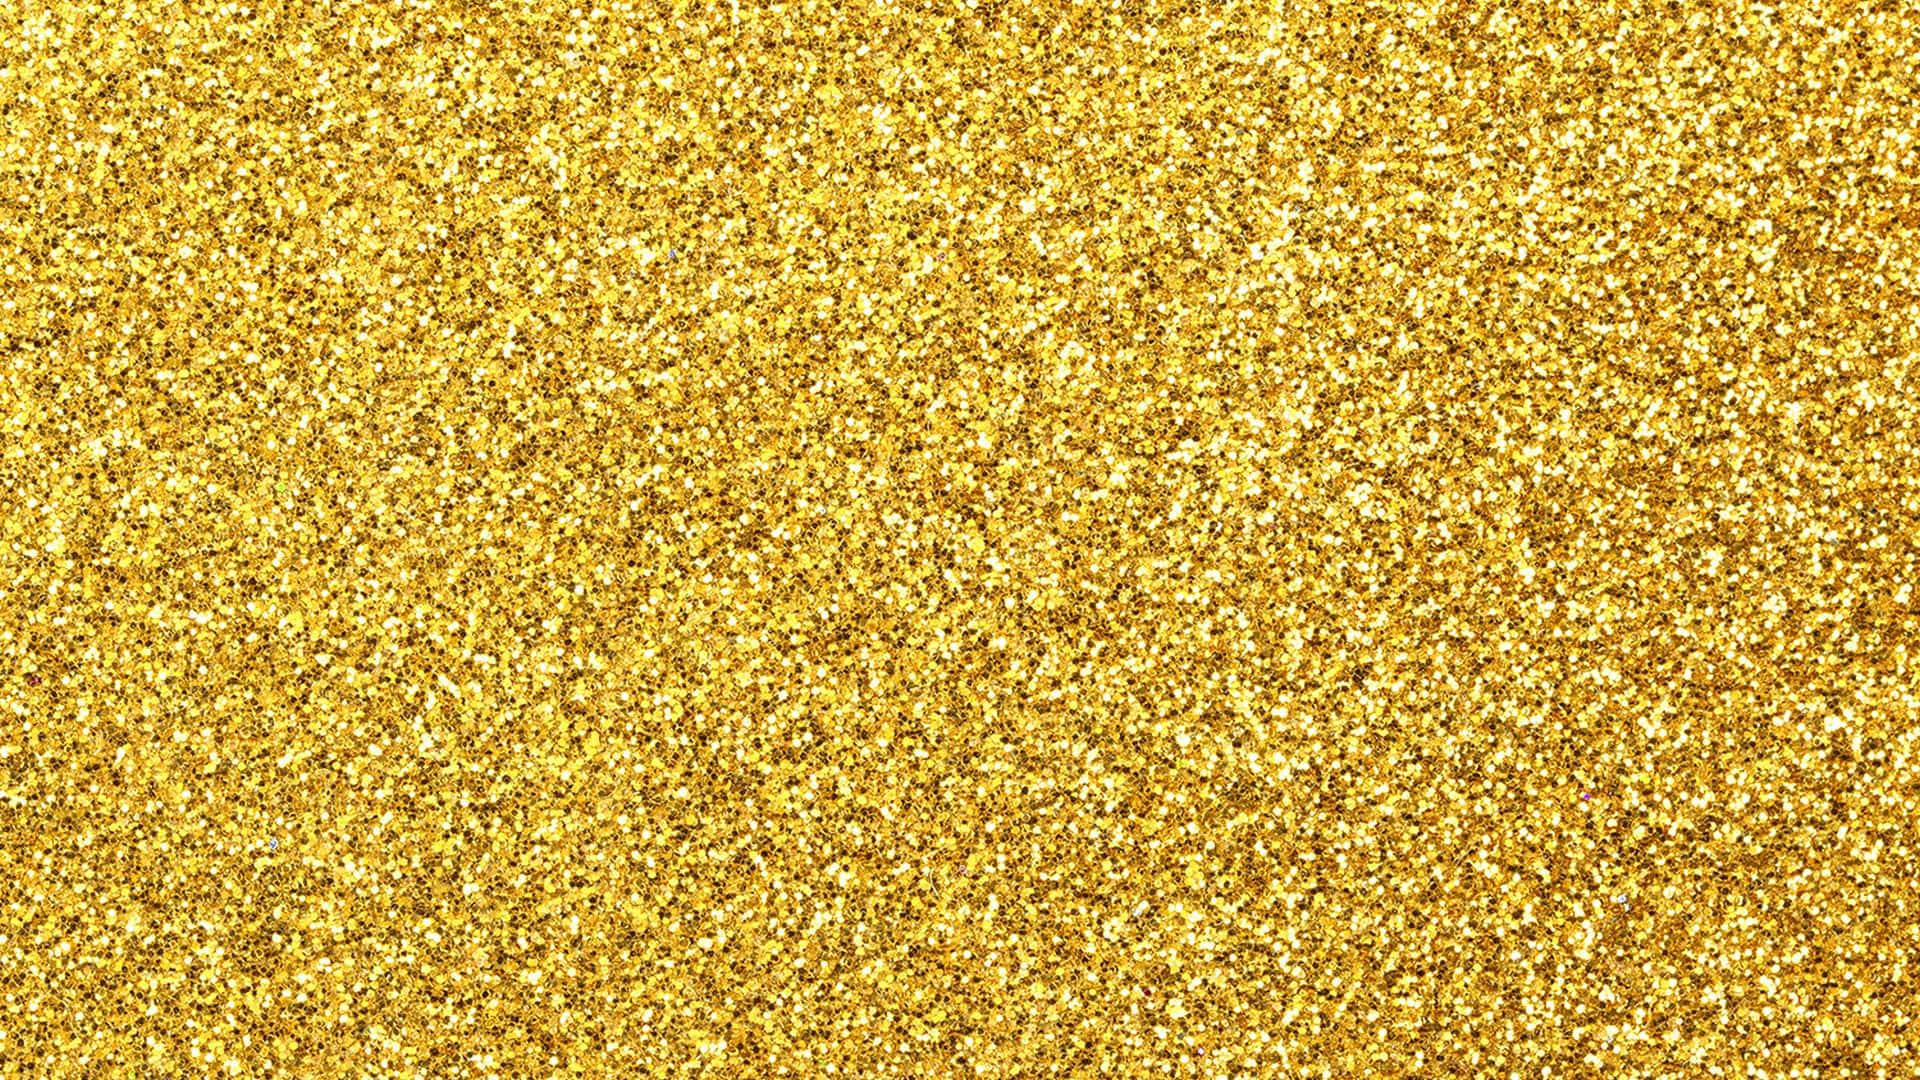 100+] Yellow Glitter Background s 